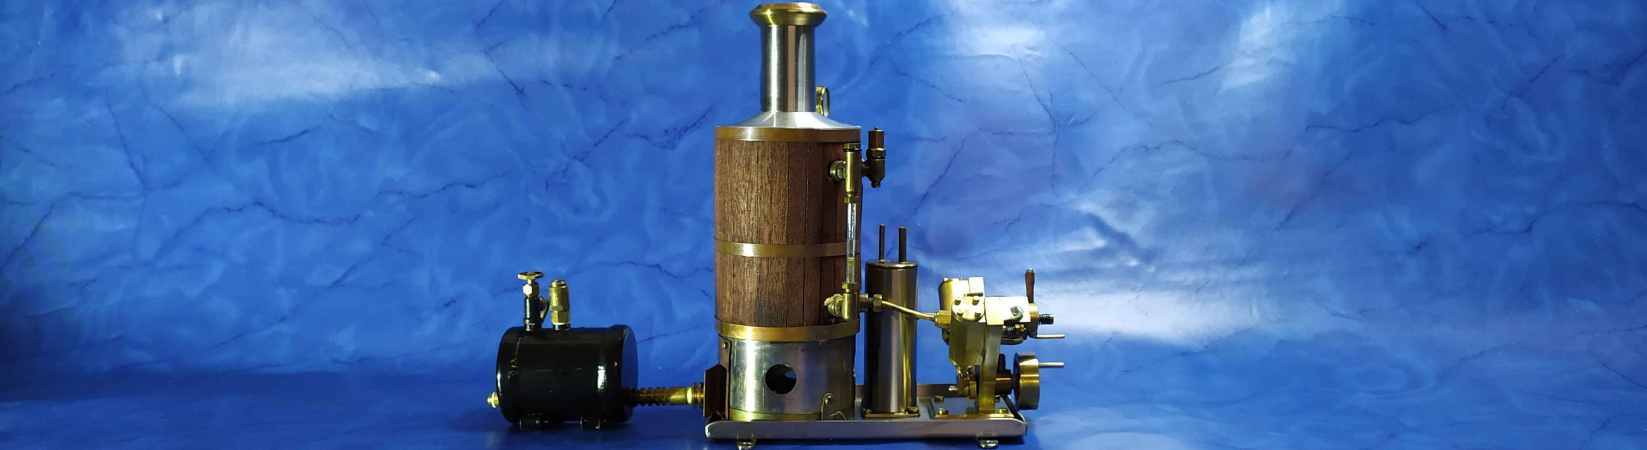 modell Dampfmaschine 